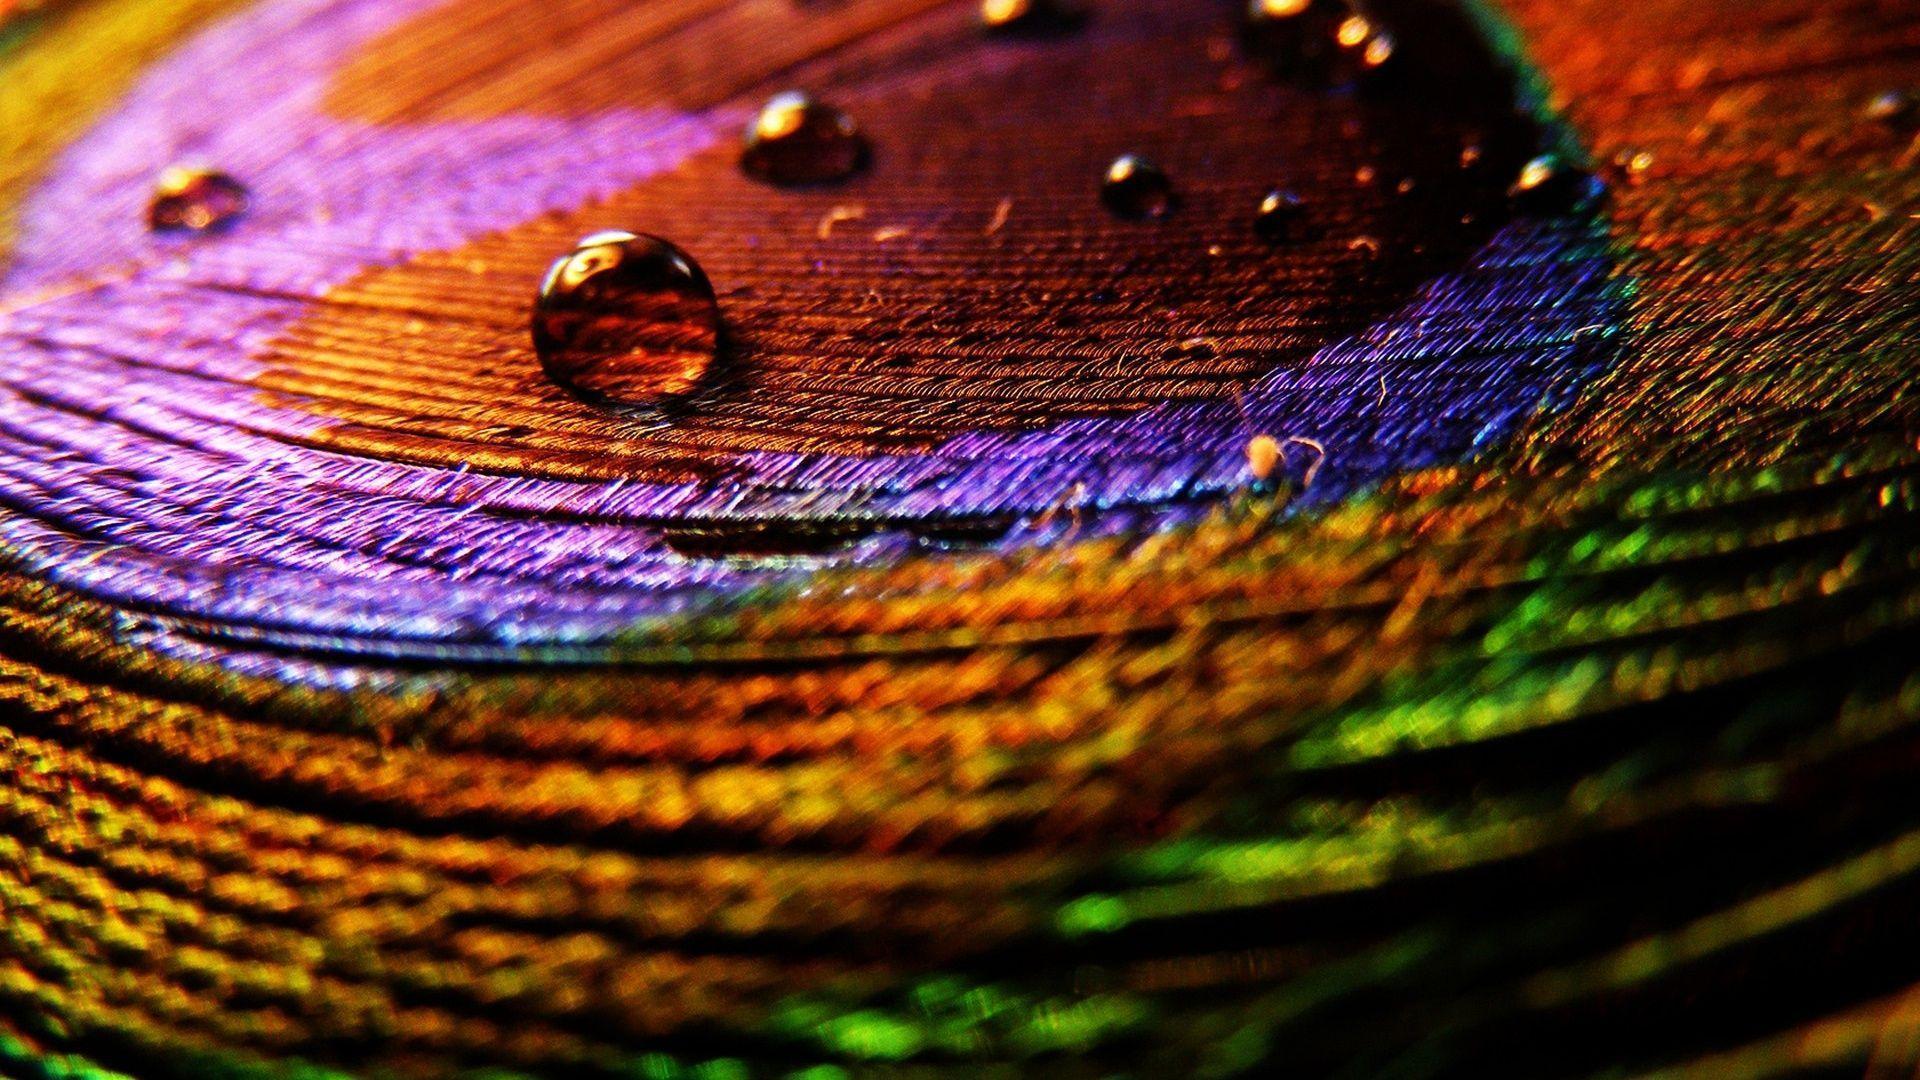 Peacock Wallpaper HD. Wallpaper, Background, Image, Art Photo